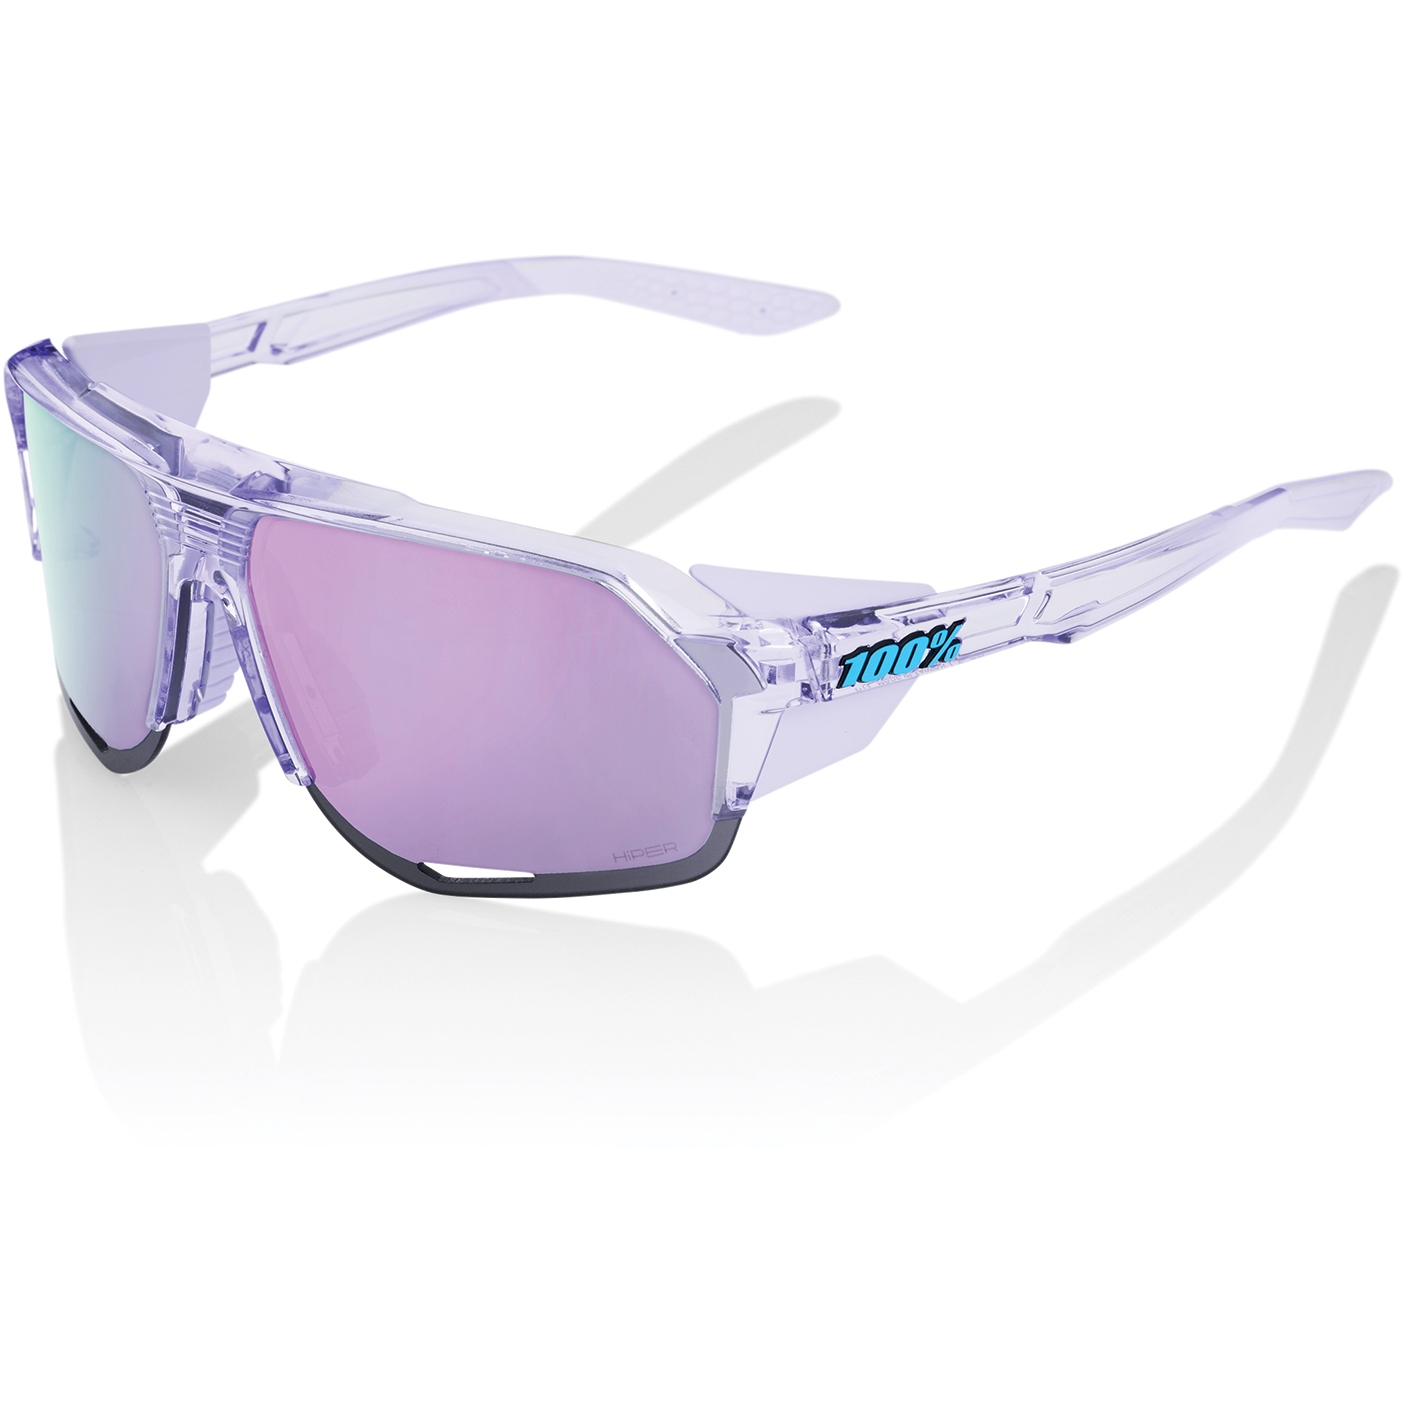 Bild von 100% Norvik Brille - HiPER Mirror Lens - Polished Translucent Lavender / Lavender + Clear